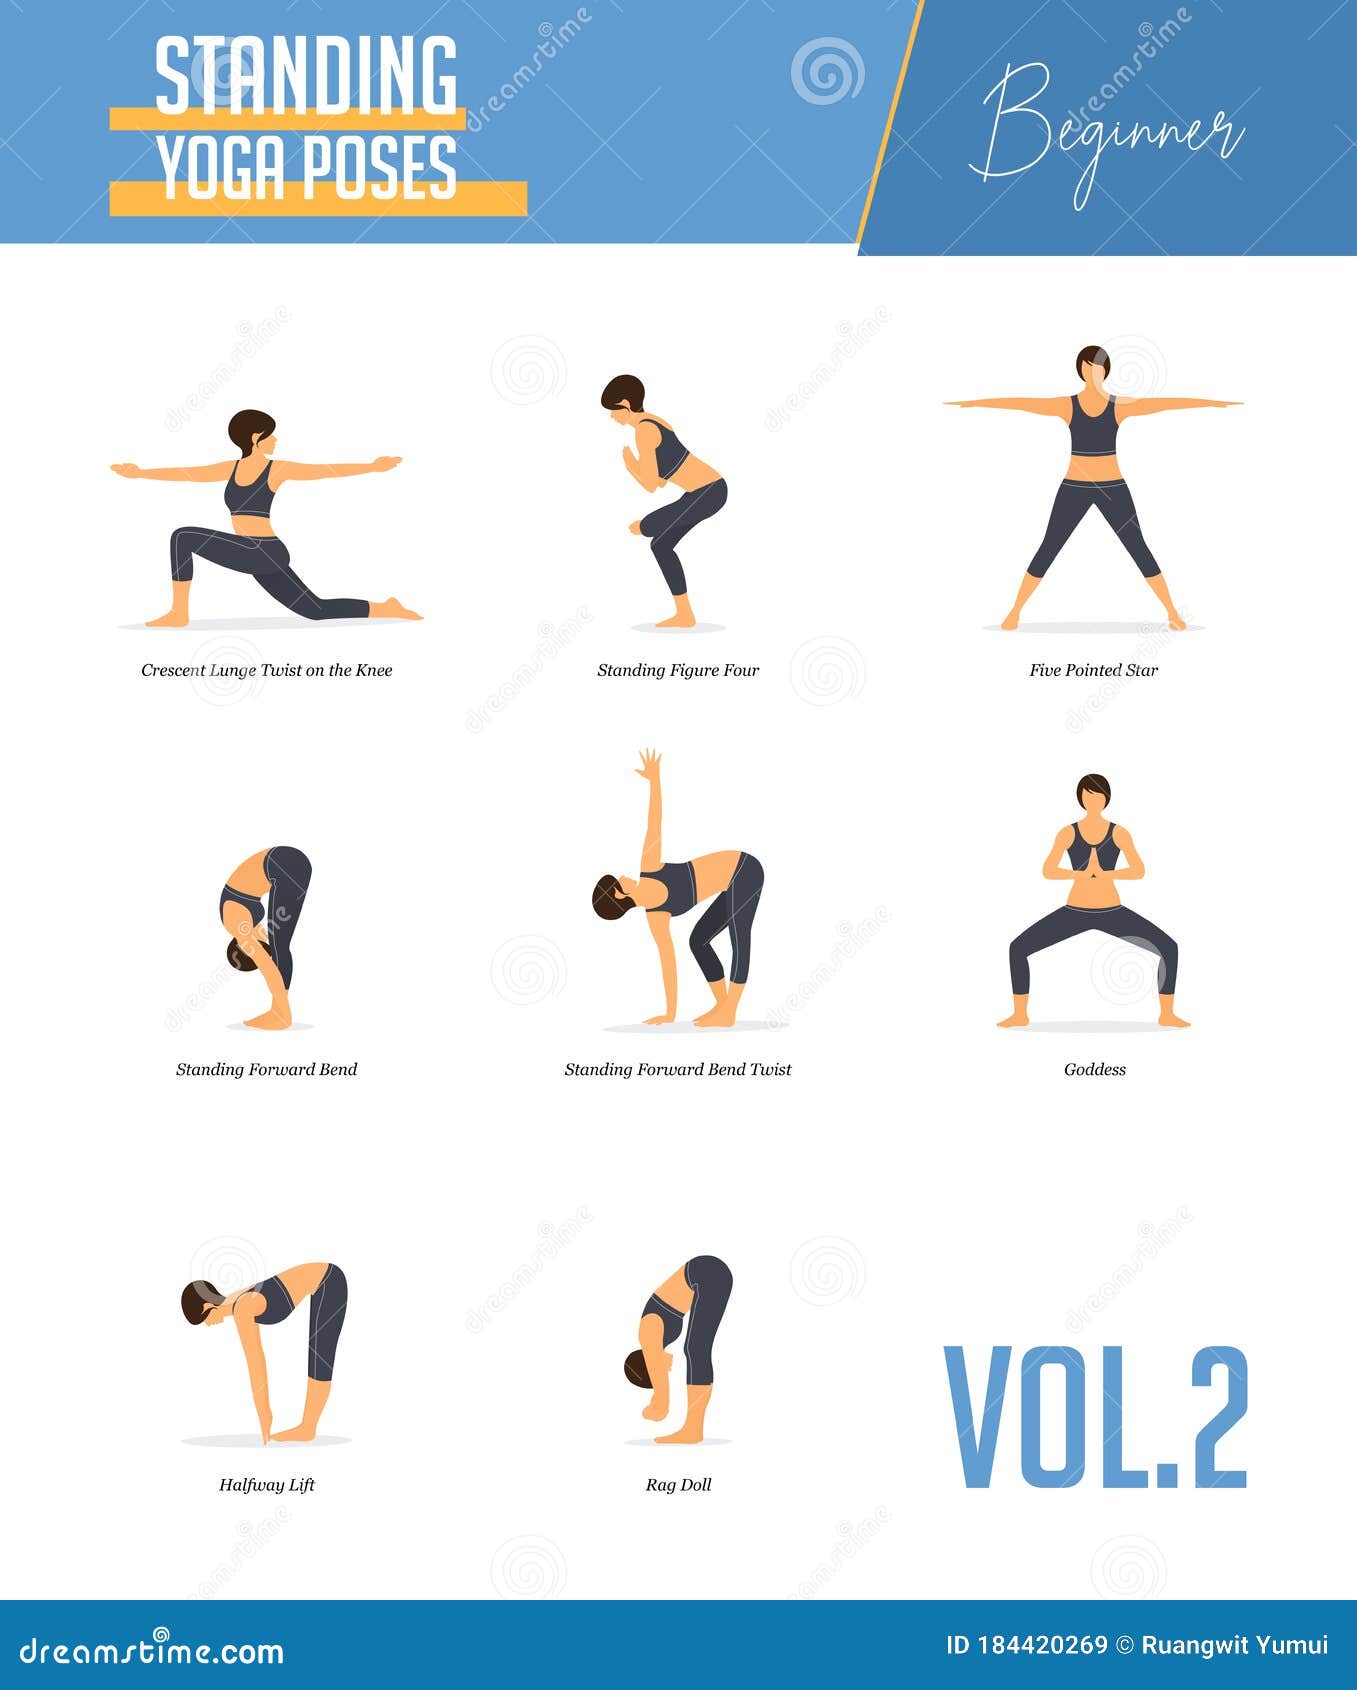 Best Standing yoga pose Illustration download in PNG & Vector format